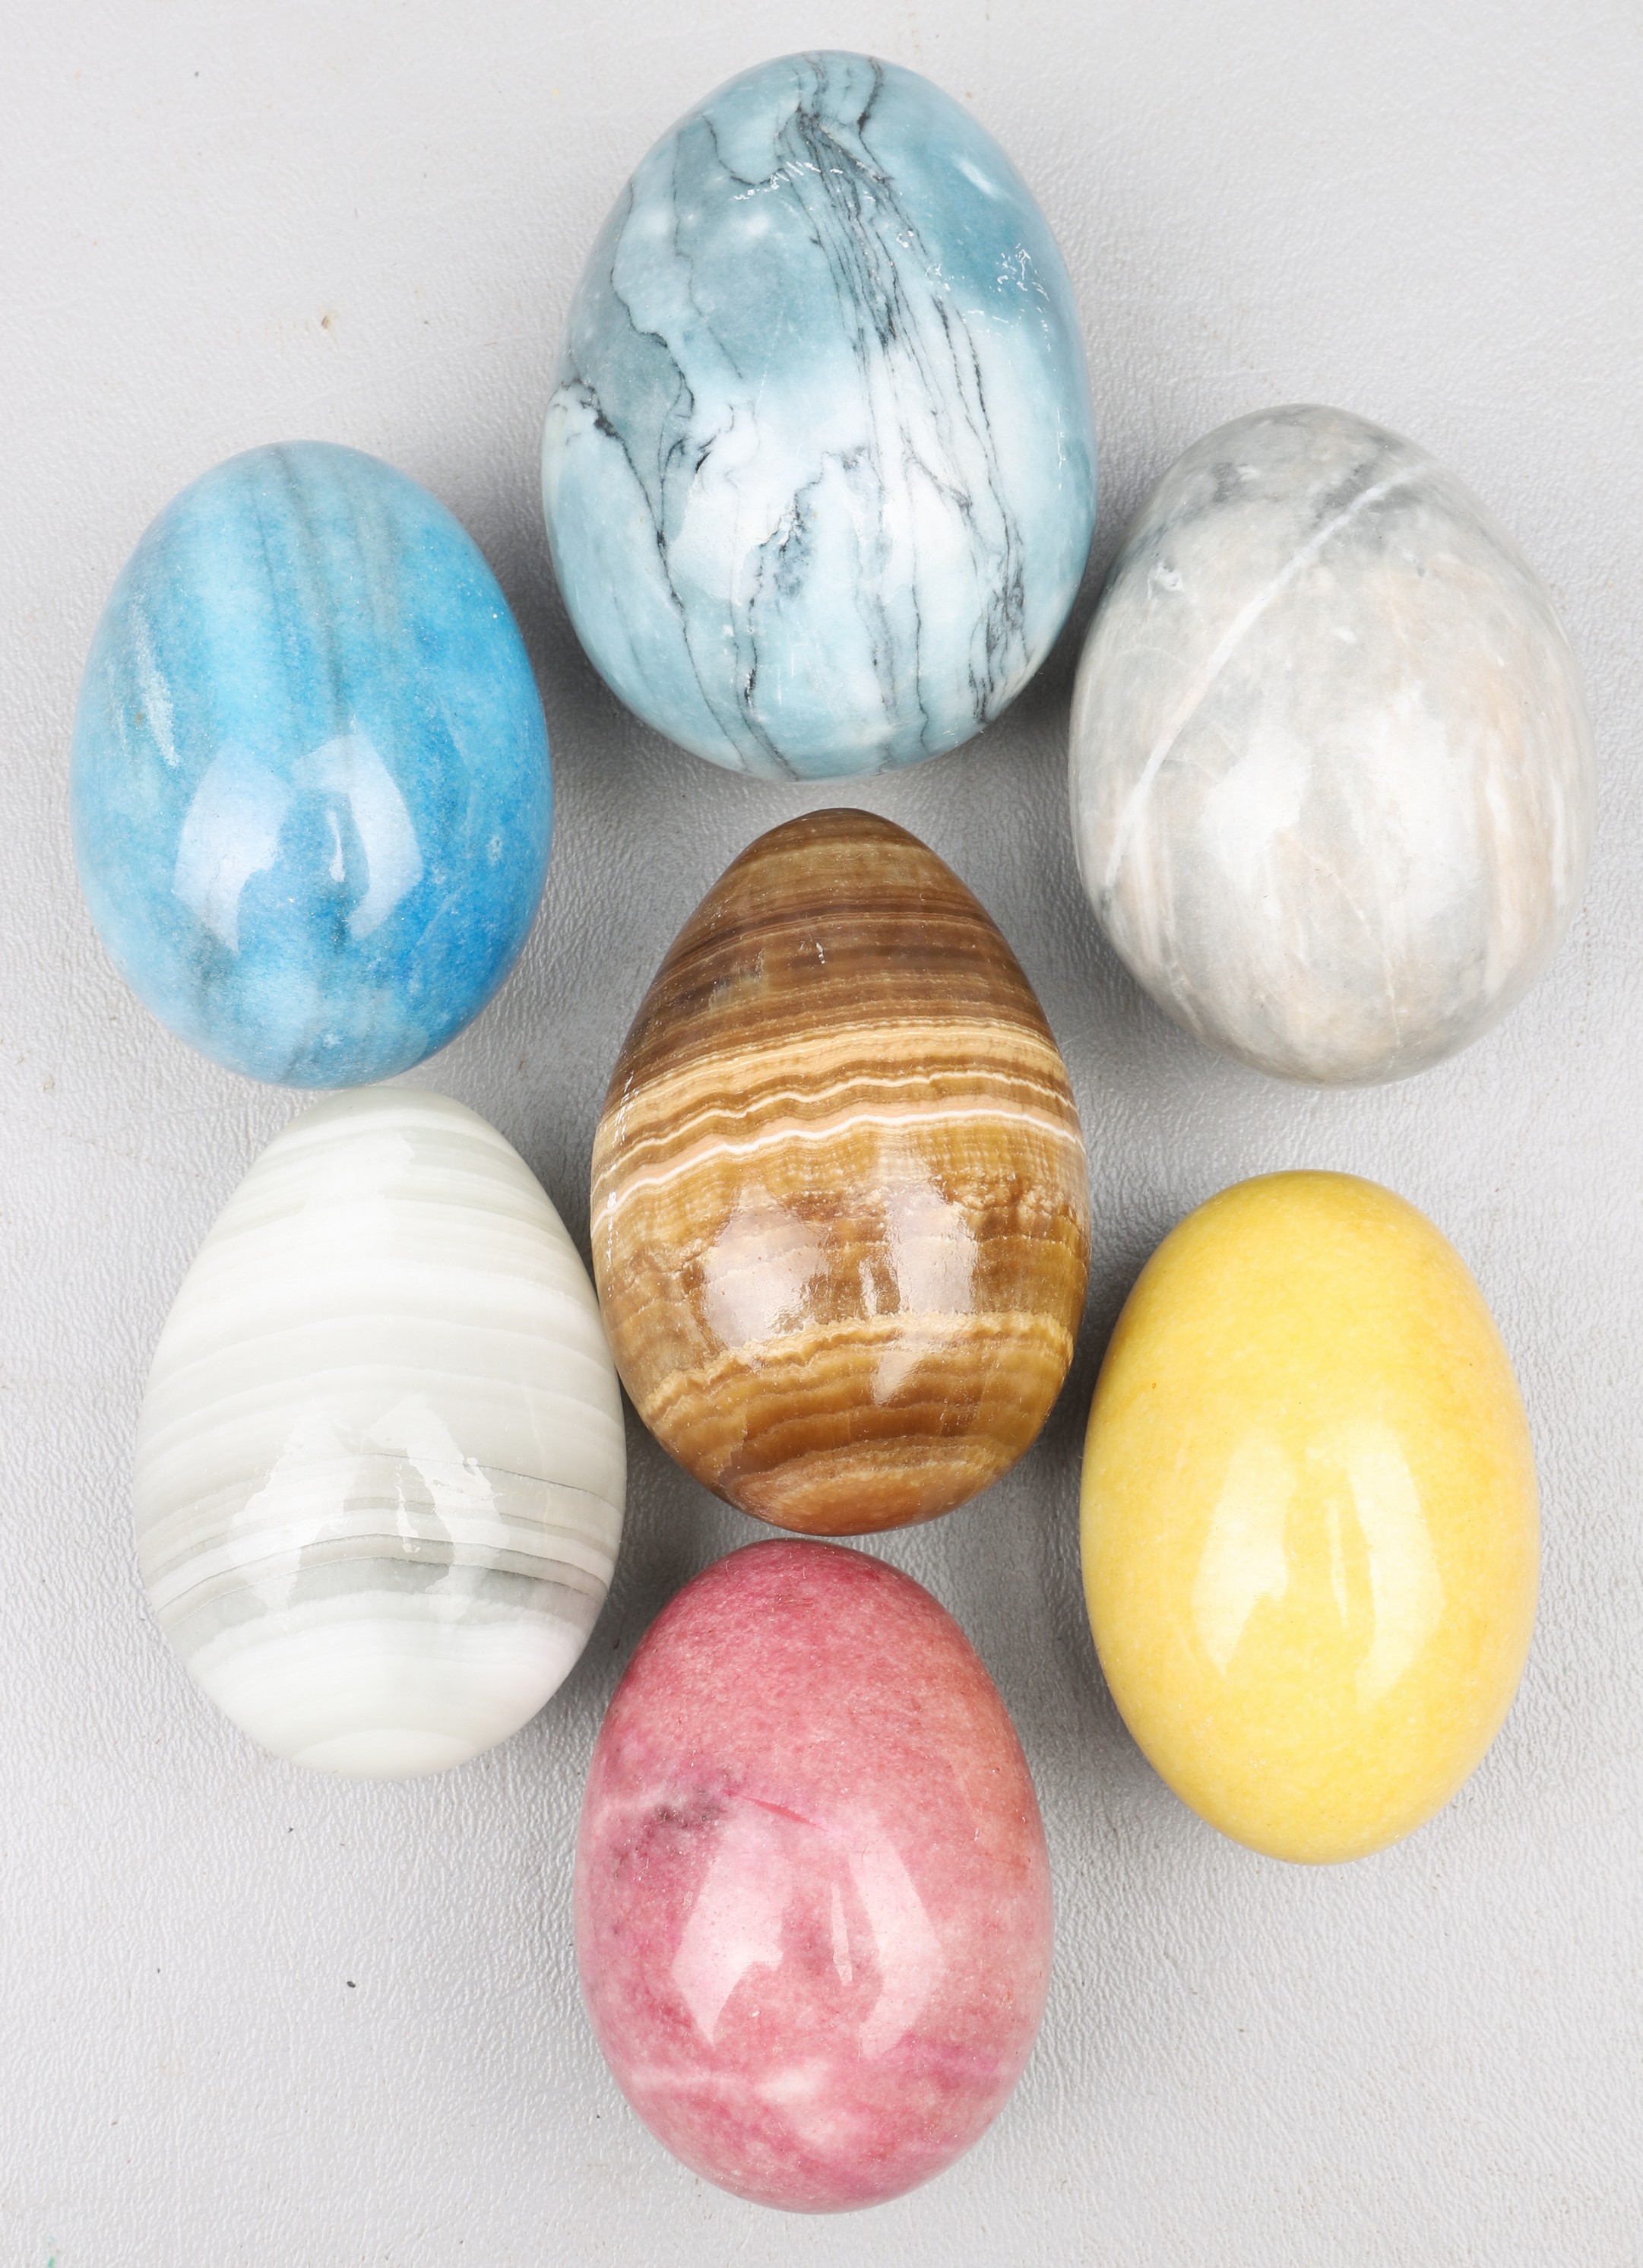 (7) Stone eggs, largest 3